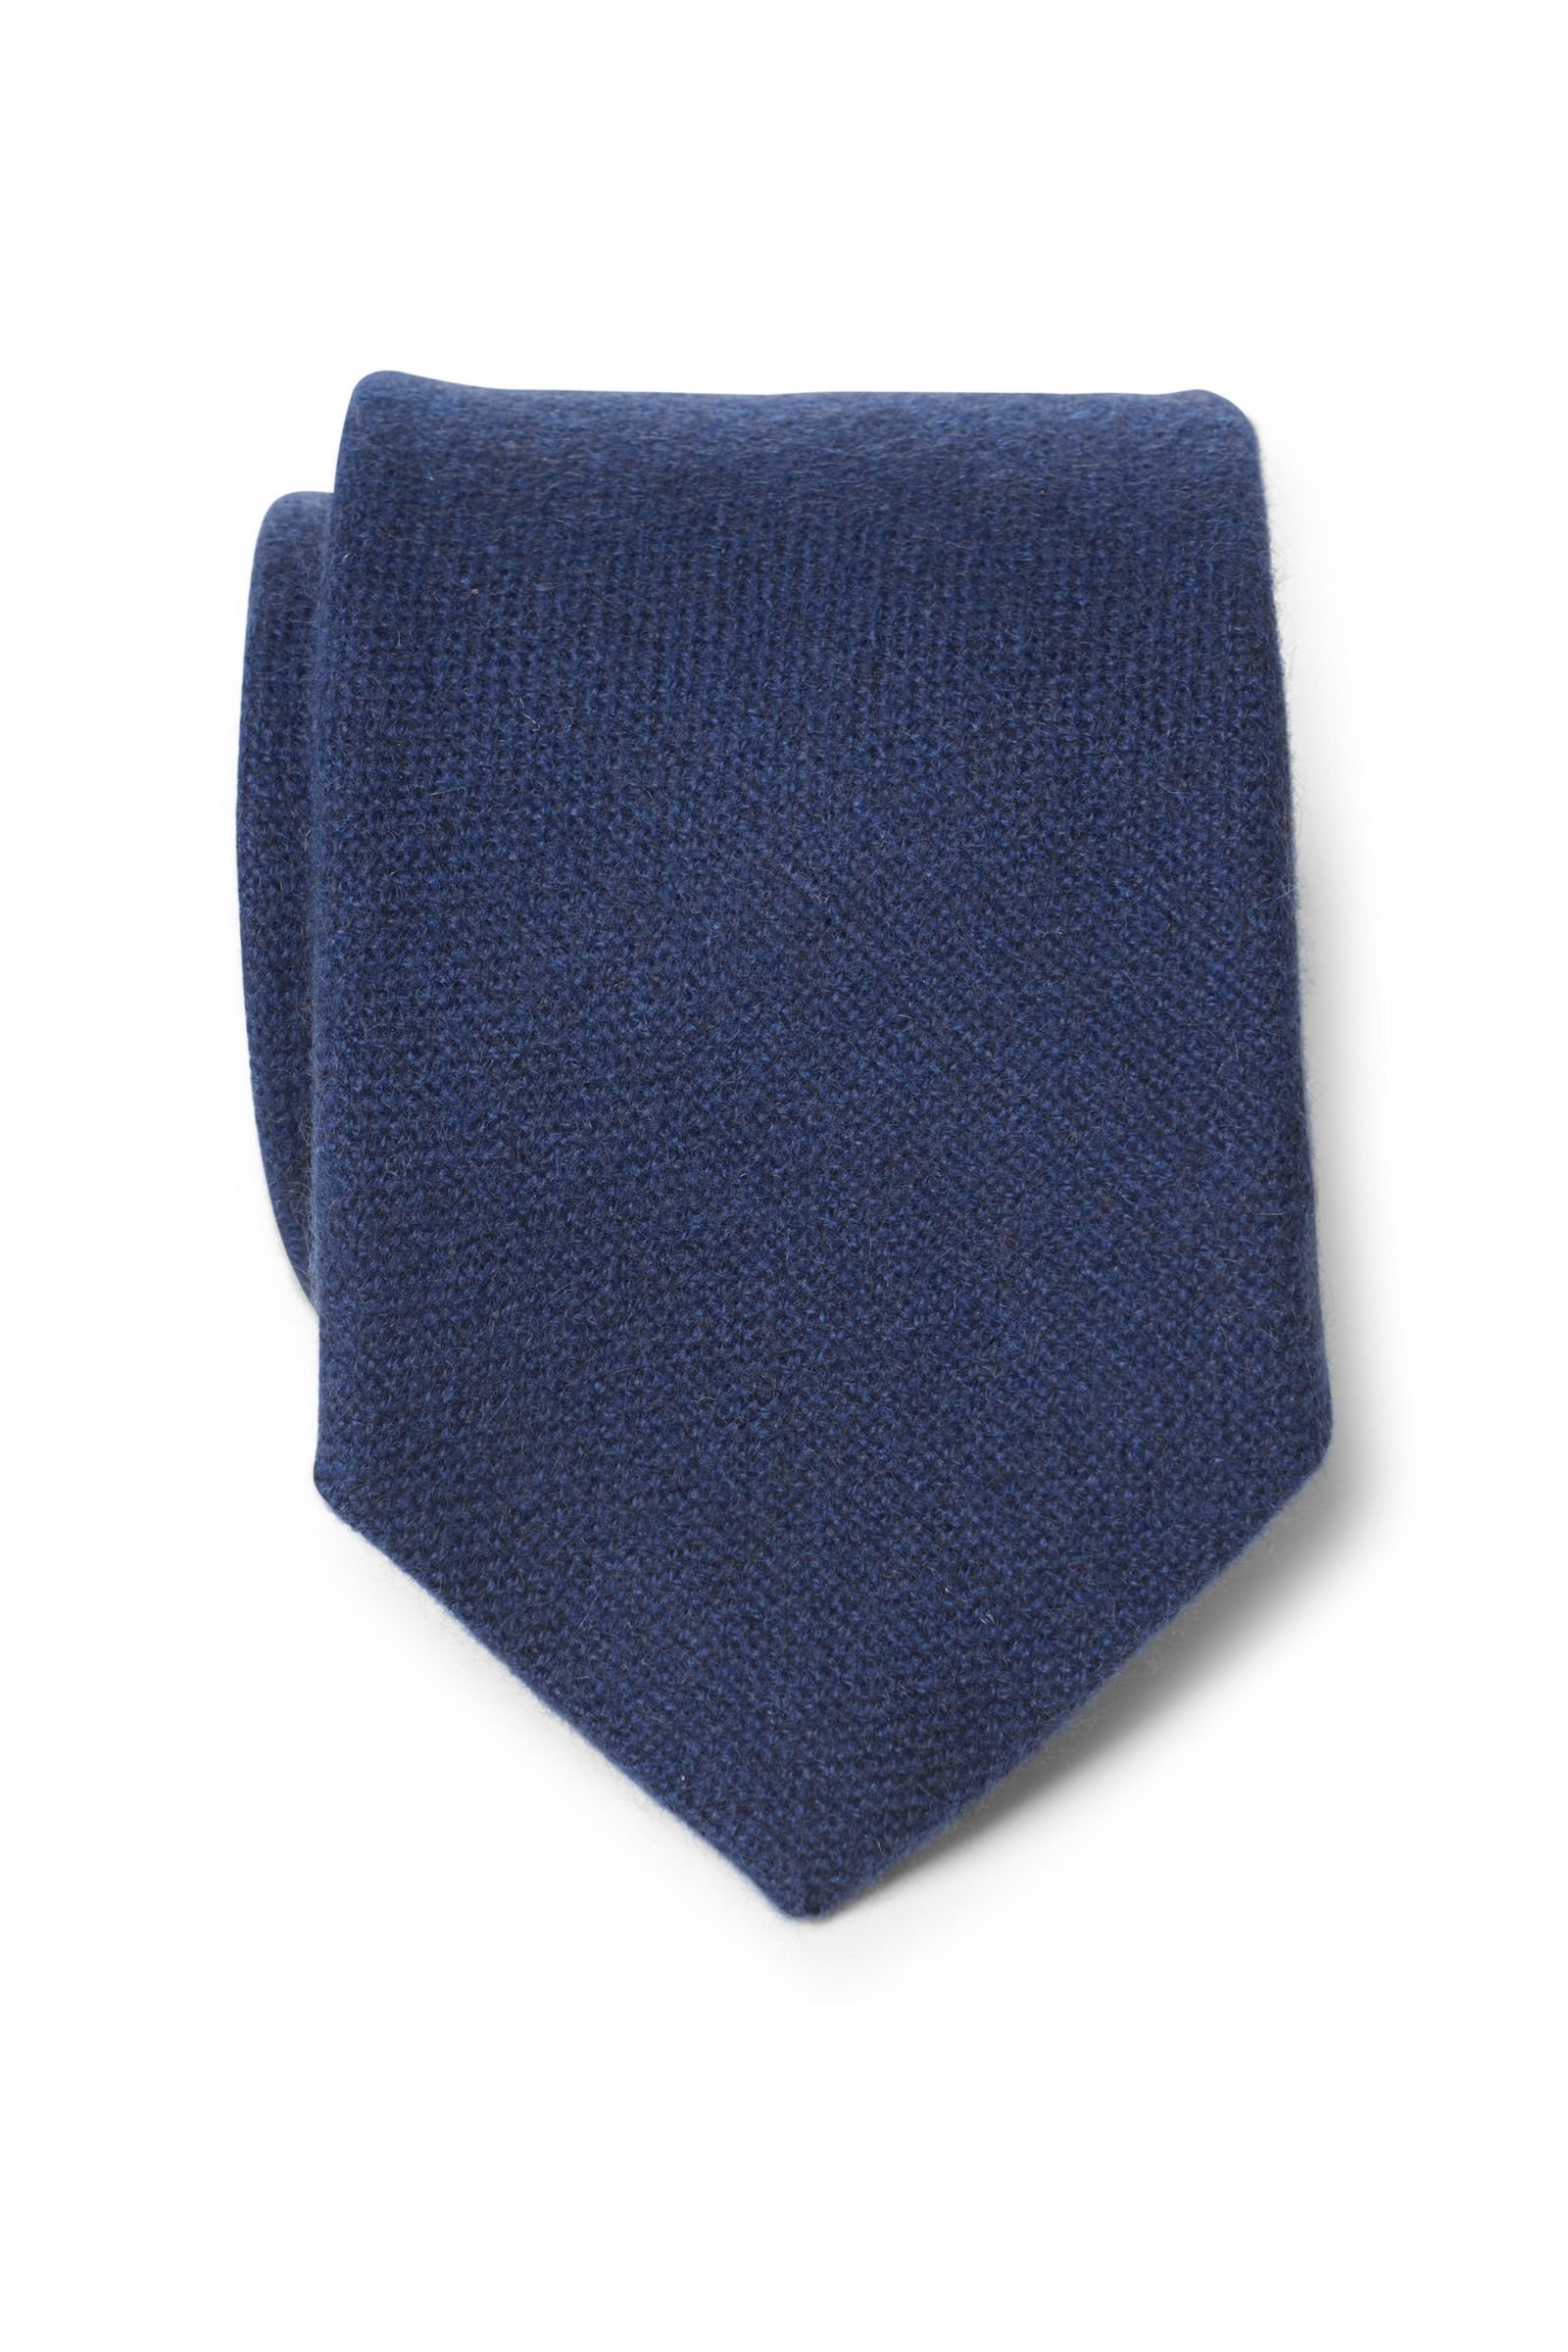 Cashmere Krawatte dunkelblau